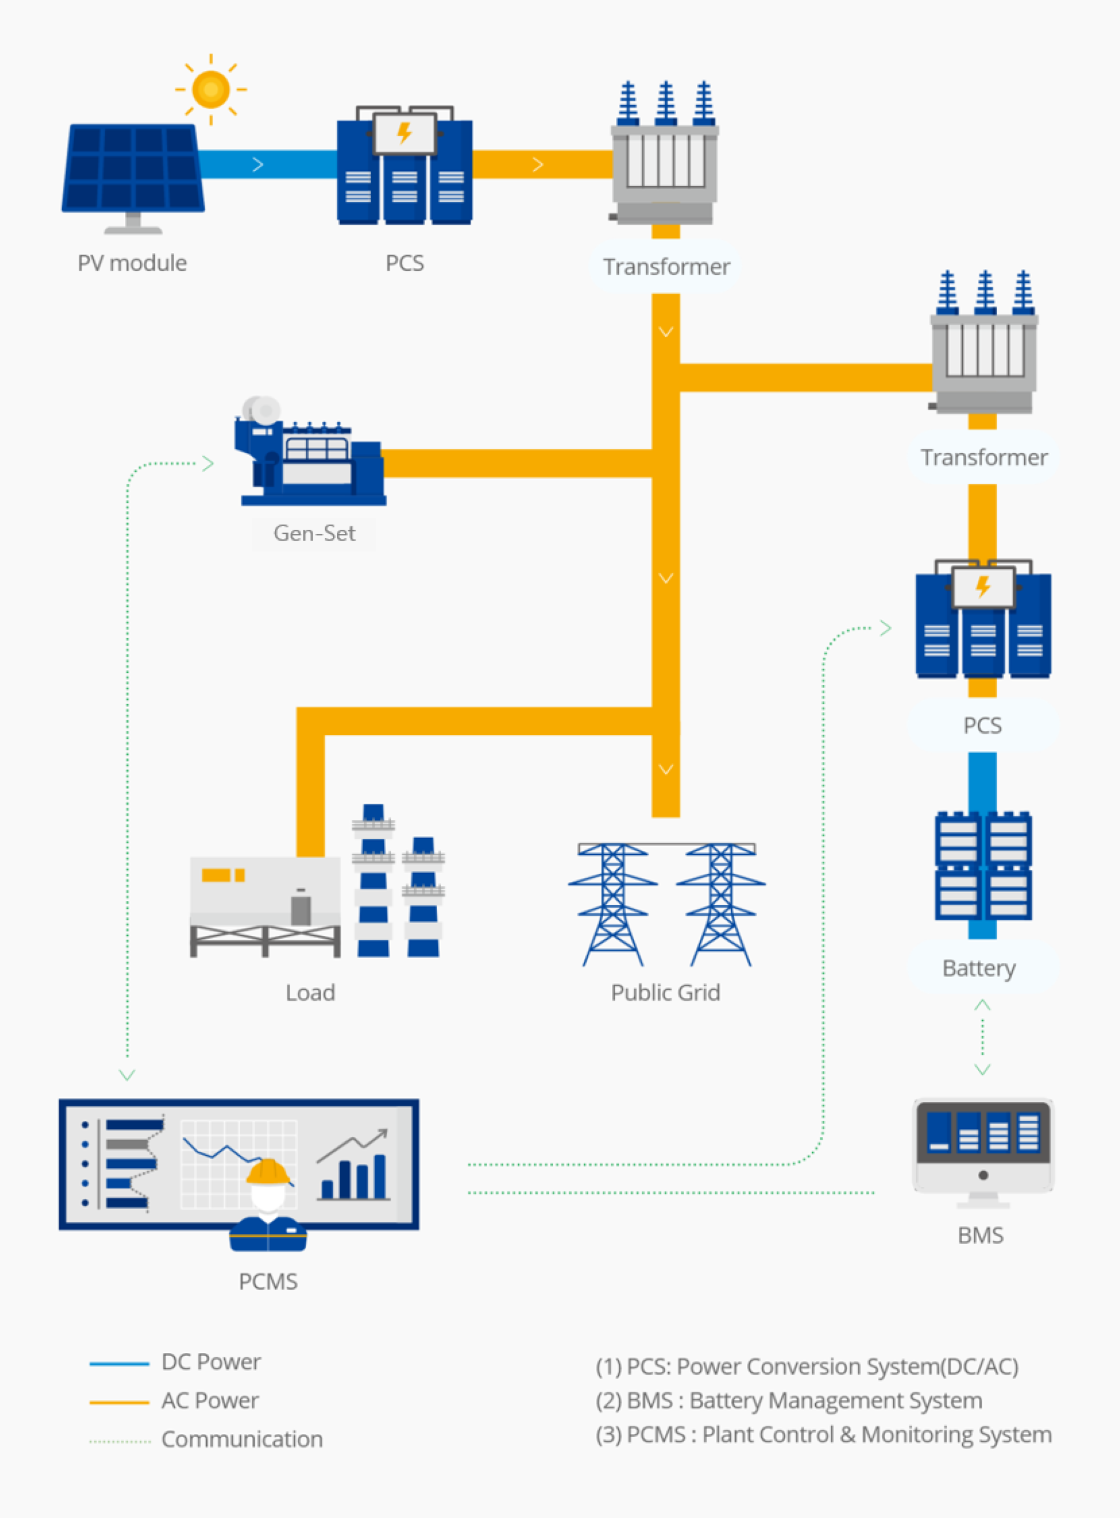 Hybrid power plant overall scheme